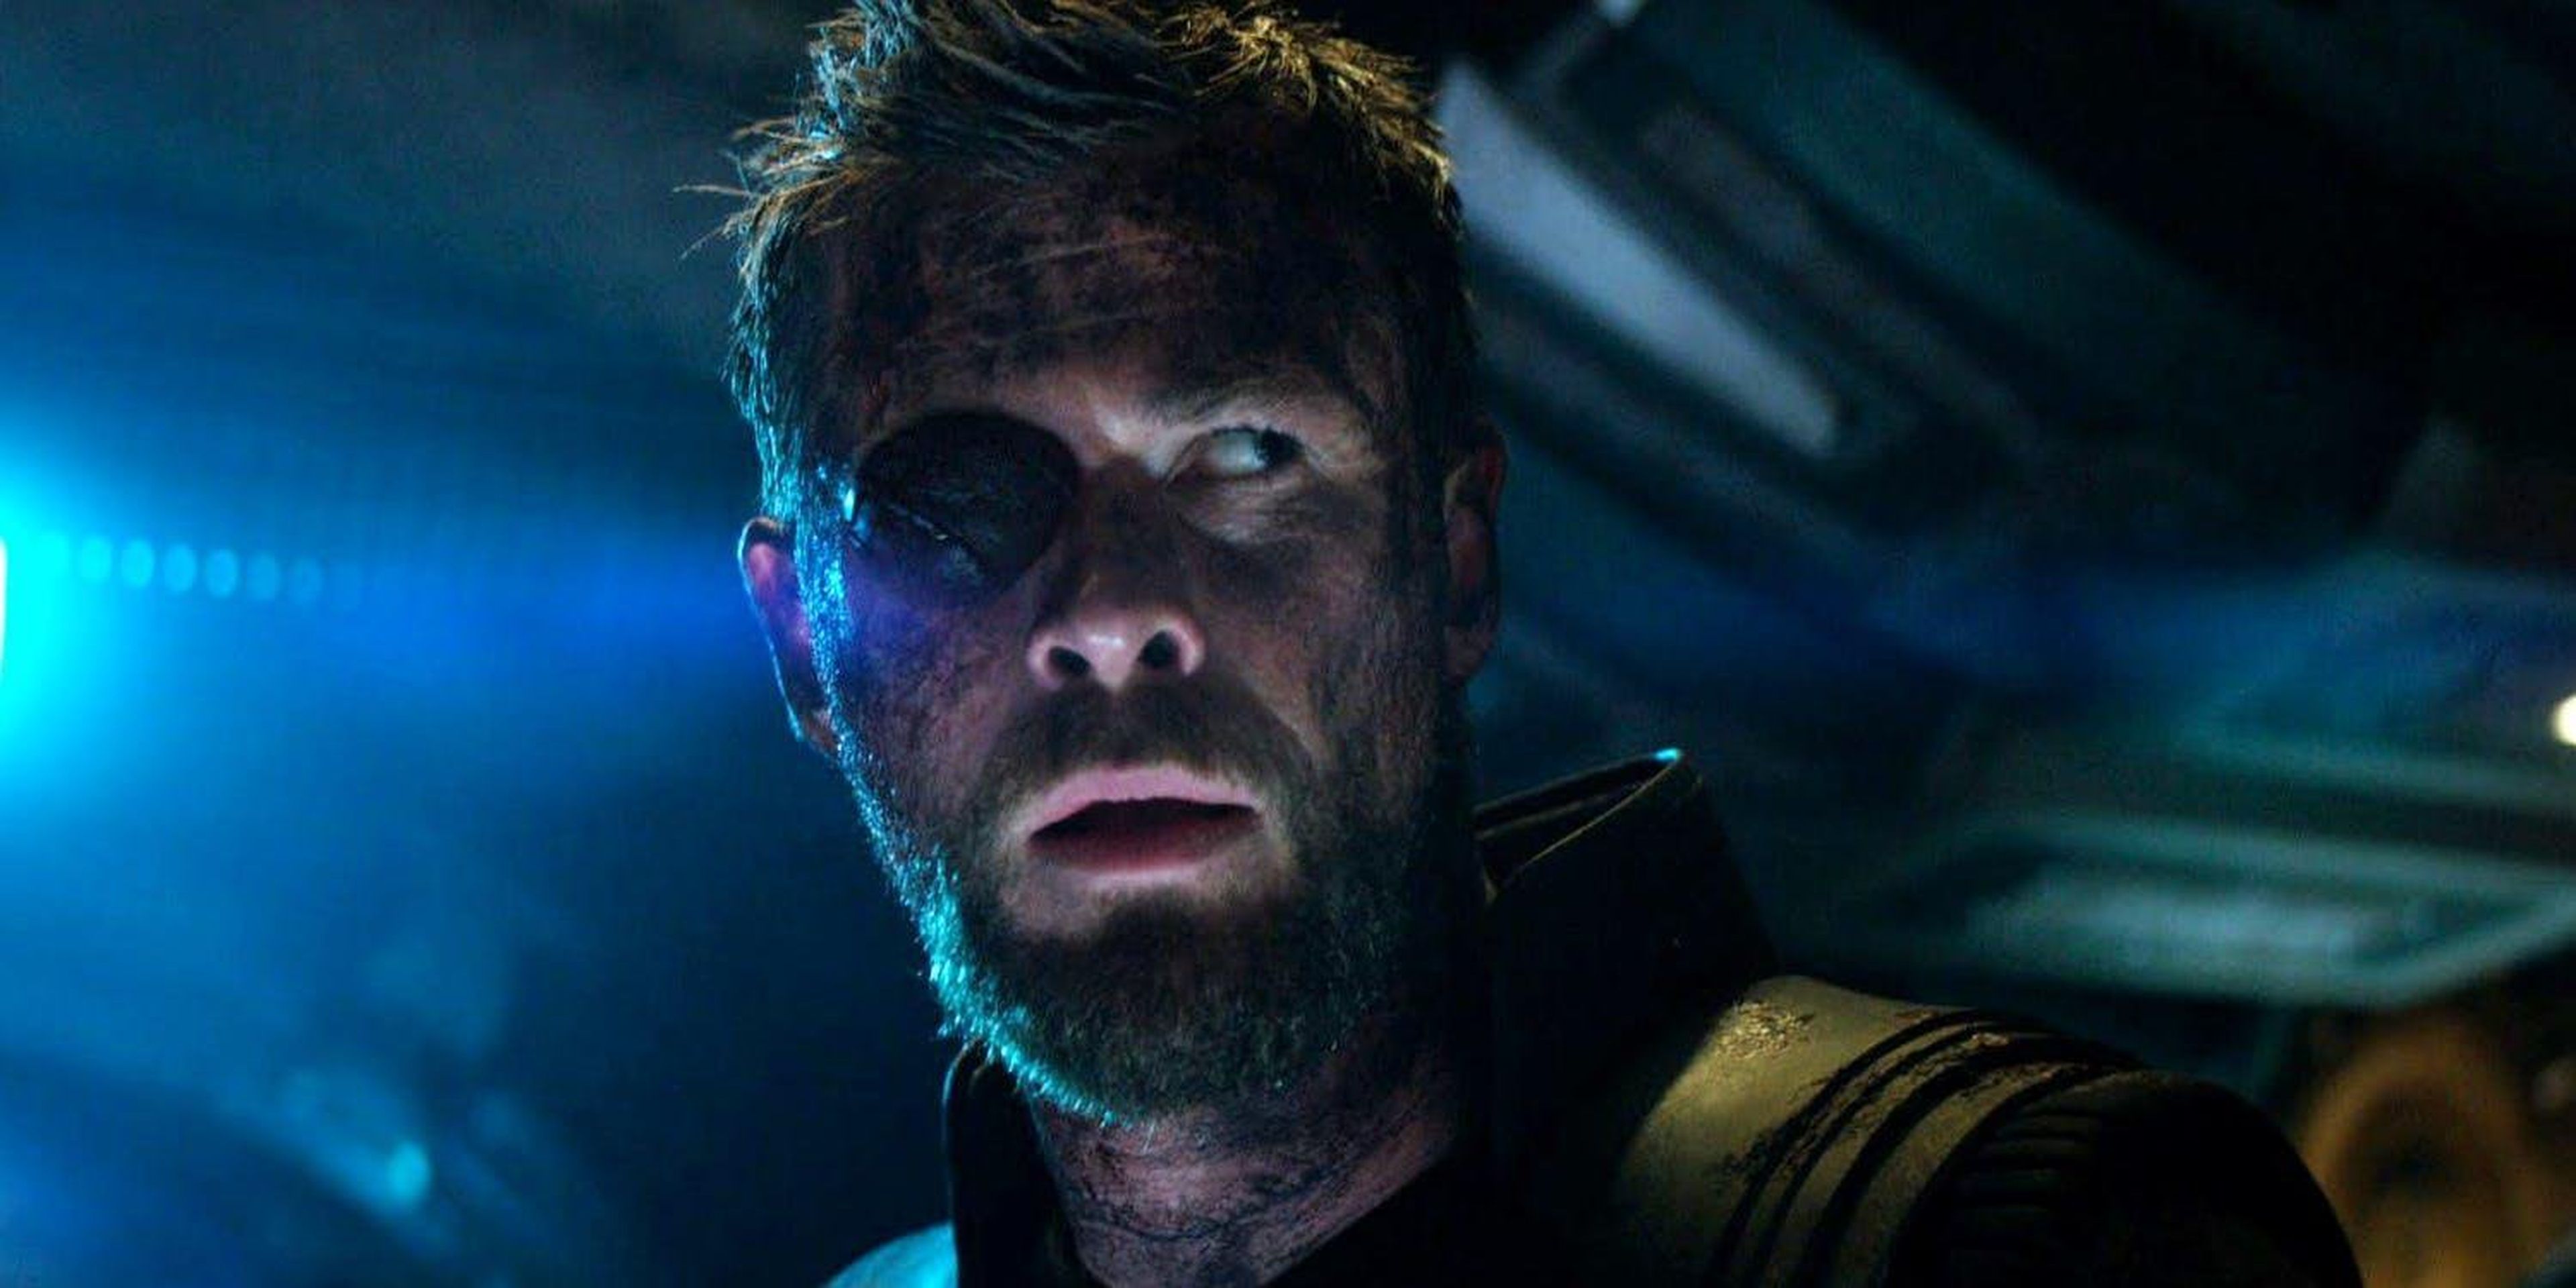 Thor en Vengadores: Infinity War